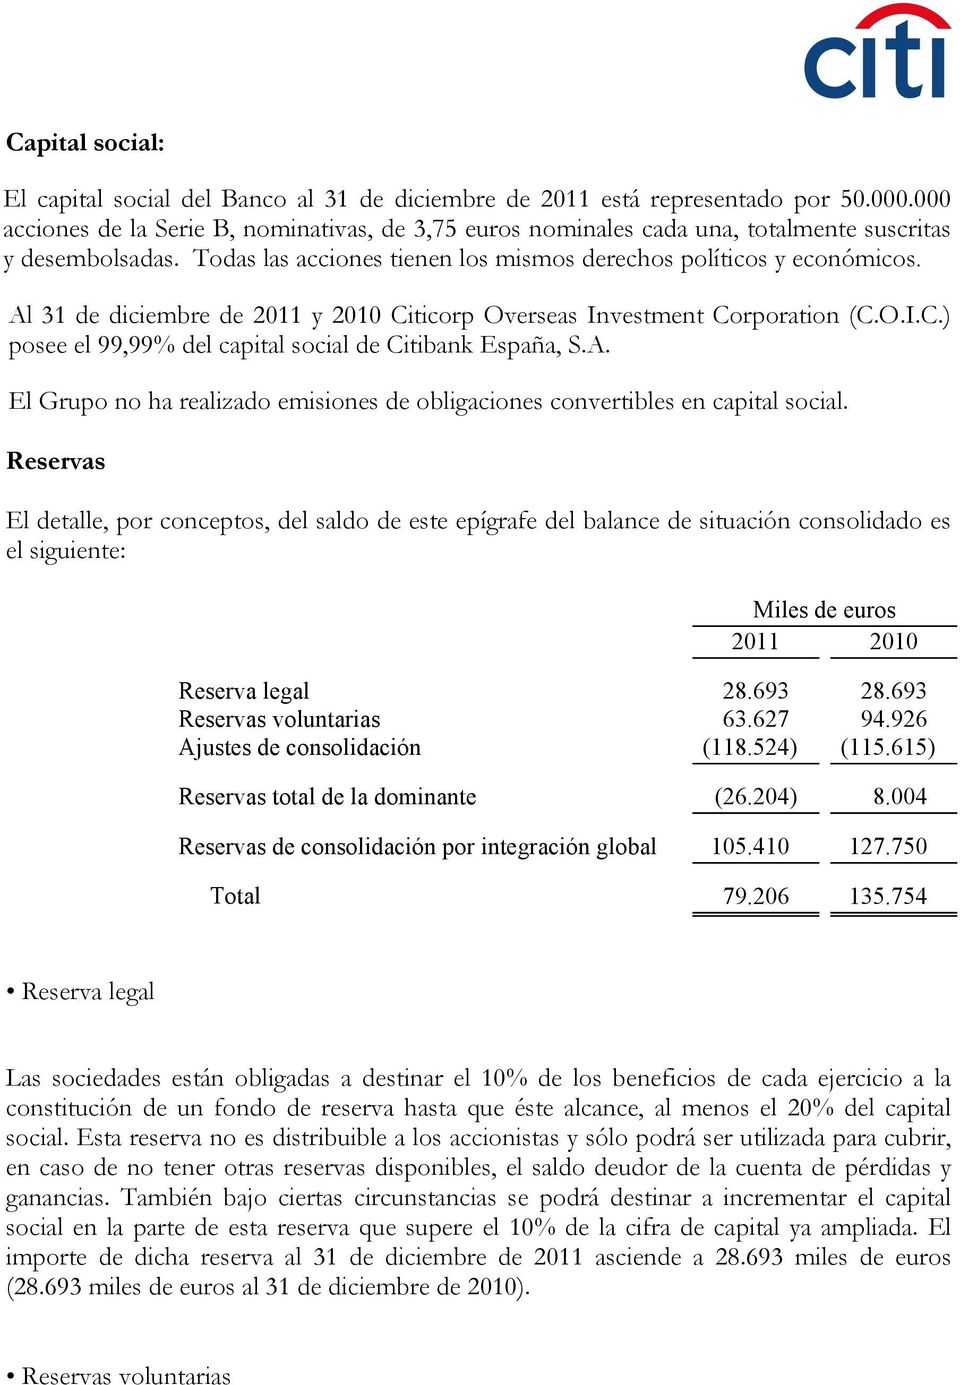 Al 31 de diciembre de 2011 y 2010 Citicorp Overseas Investment Corporation (C.O.I.C.) posee el 99,99% del capital social de Citibank España, S.A. El Grupo no ha realizado emisiones de obligaciones convertibles en capital social.